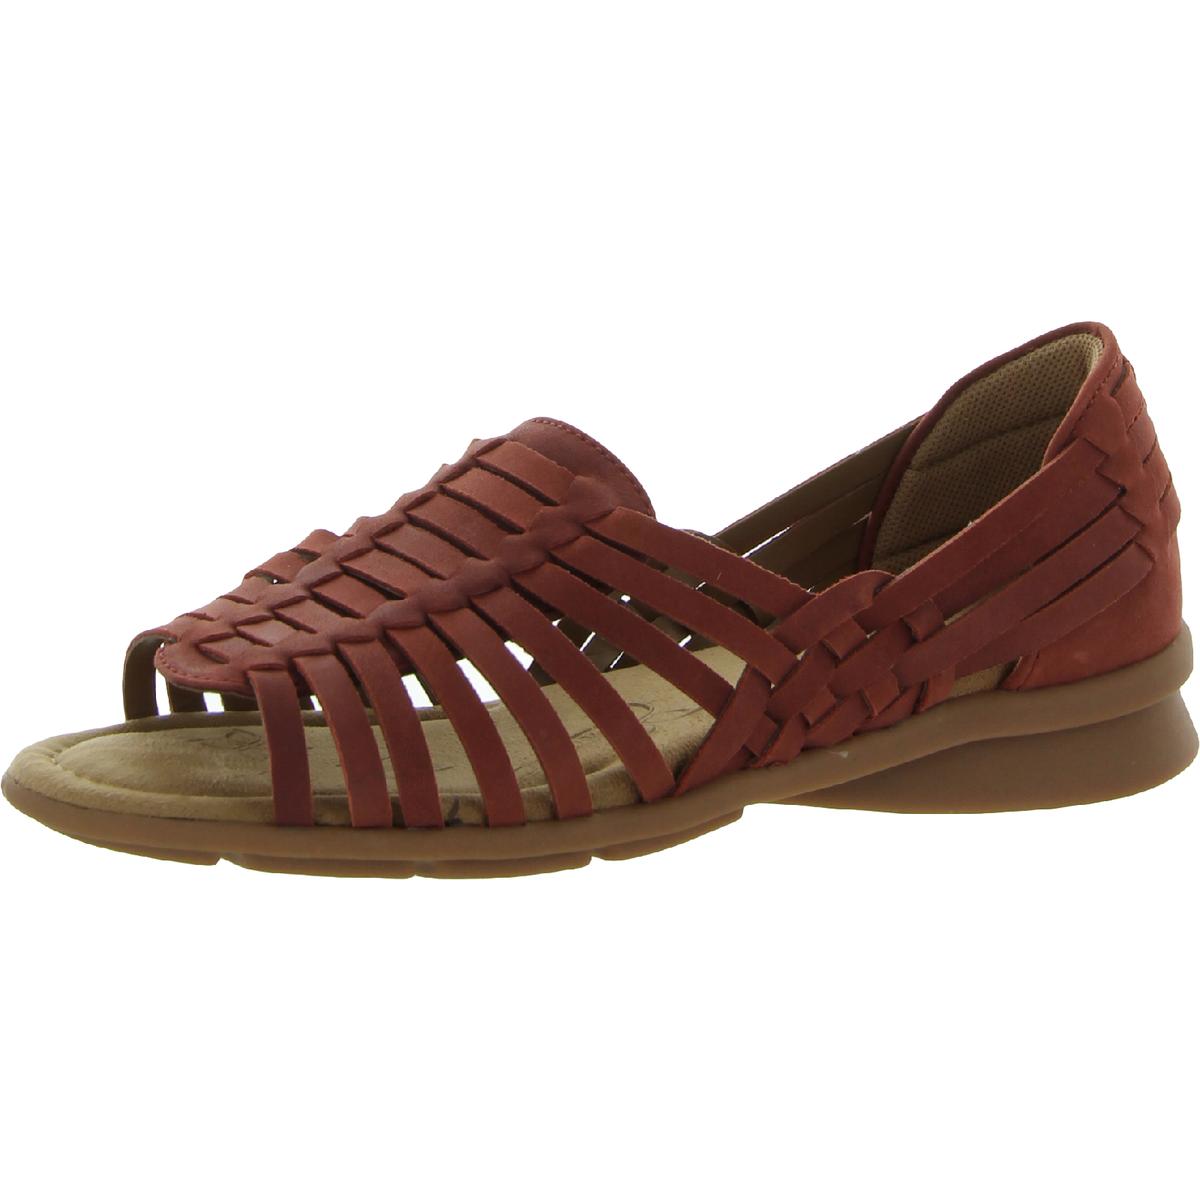 Comfortiva Womens Leather Memory Foam Huarache Sandals